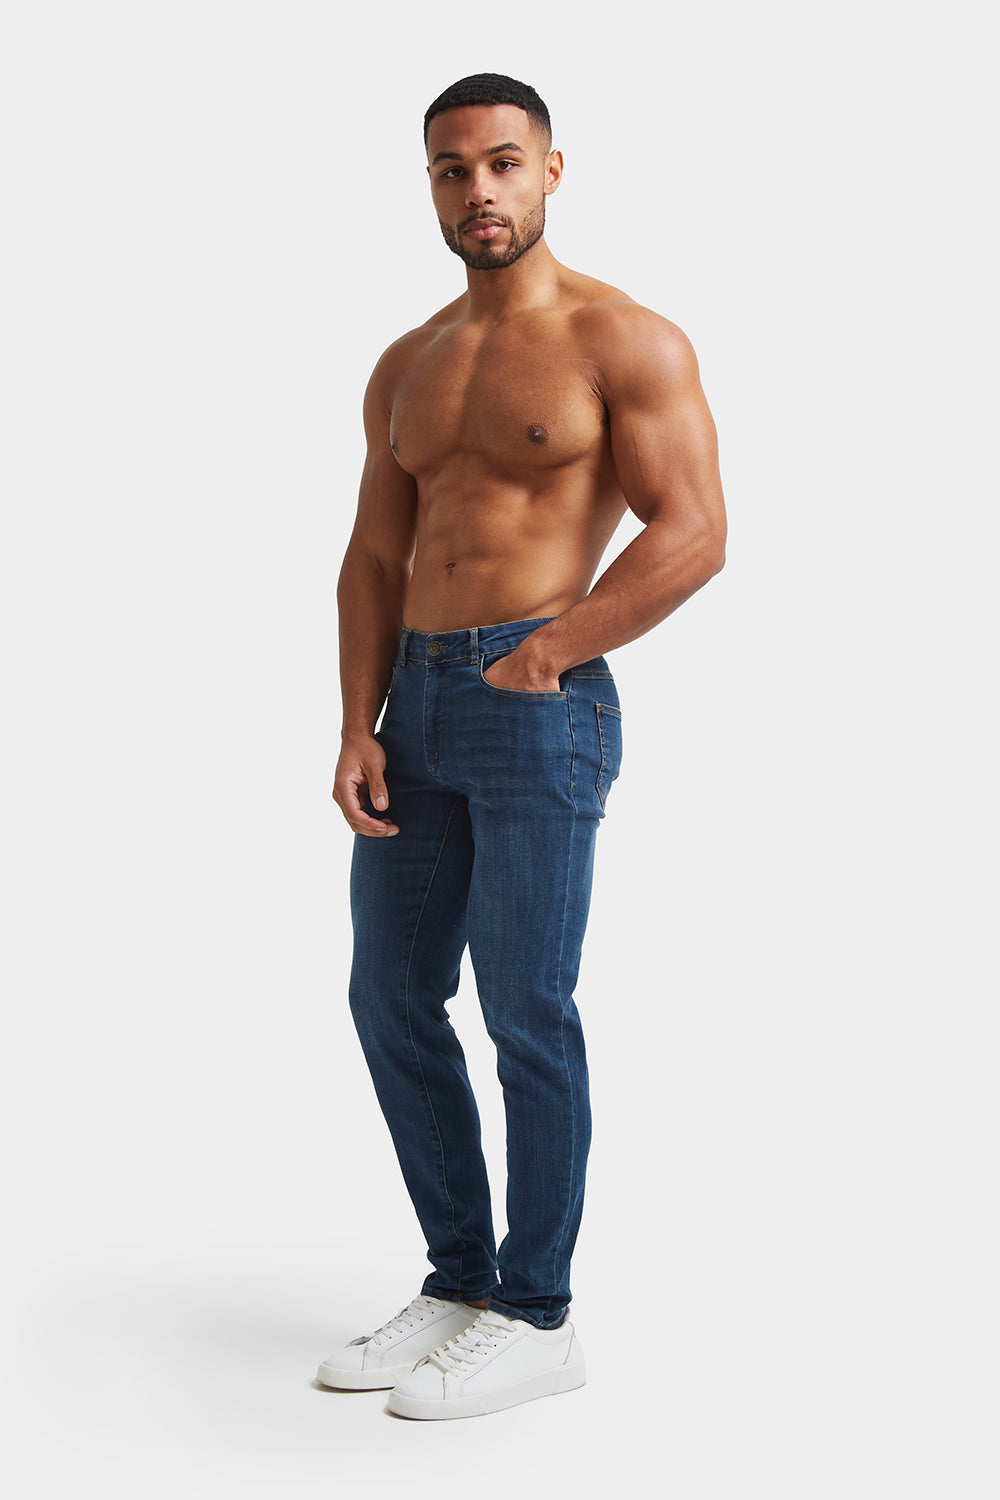 Aggregate more than 188 shirt on dark blue jeans super hot